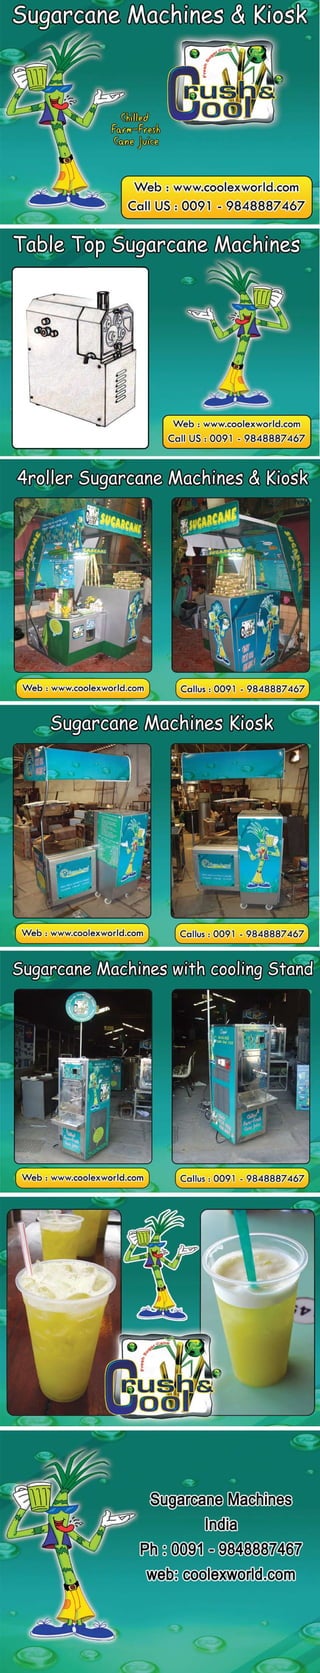 Sugarcane machine kerala